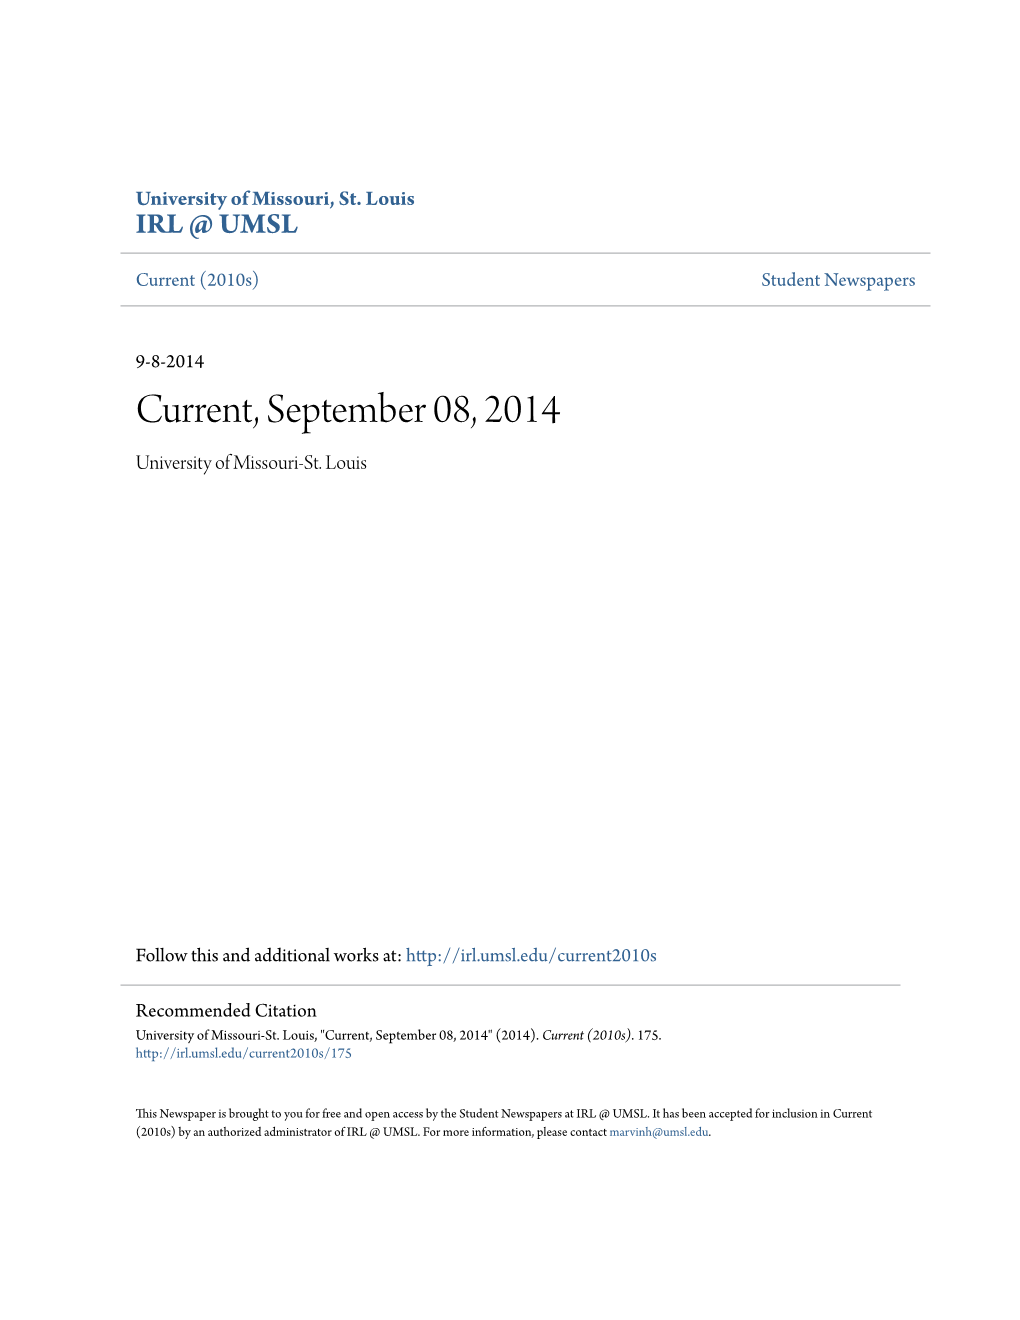 Current, September 08, 2014 University of Missouri-St